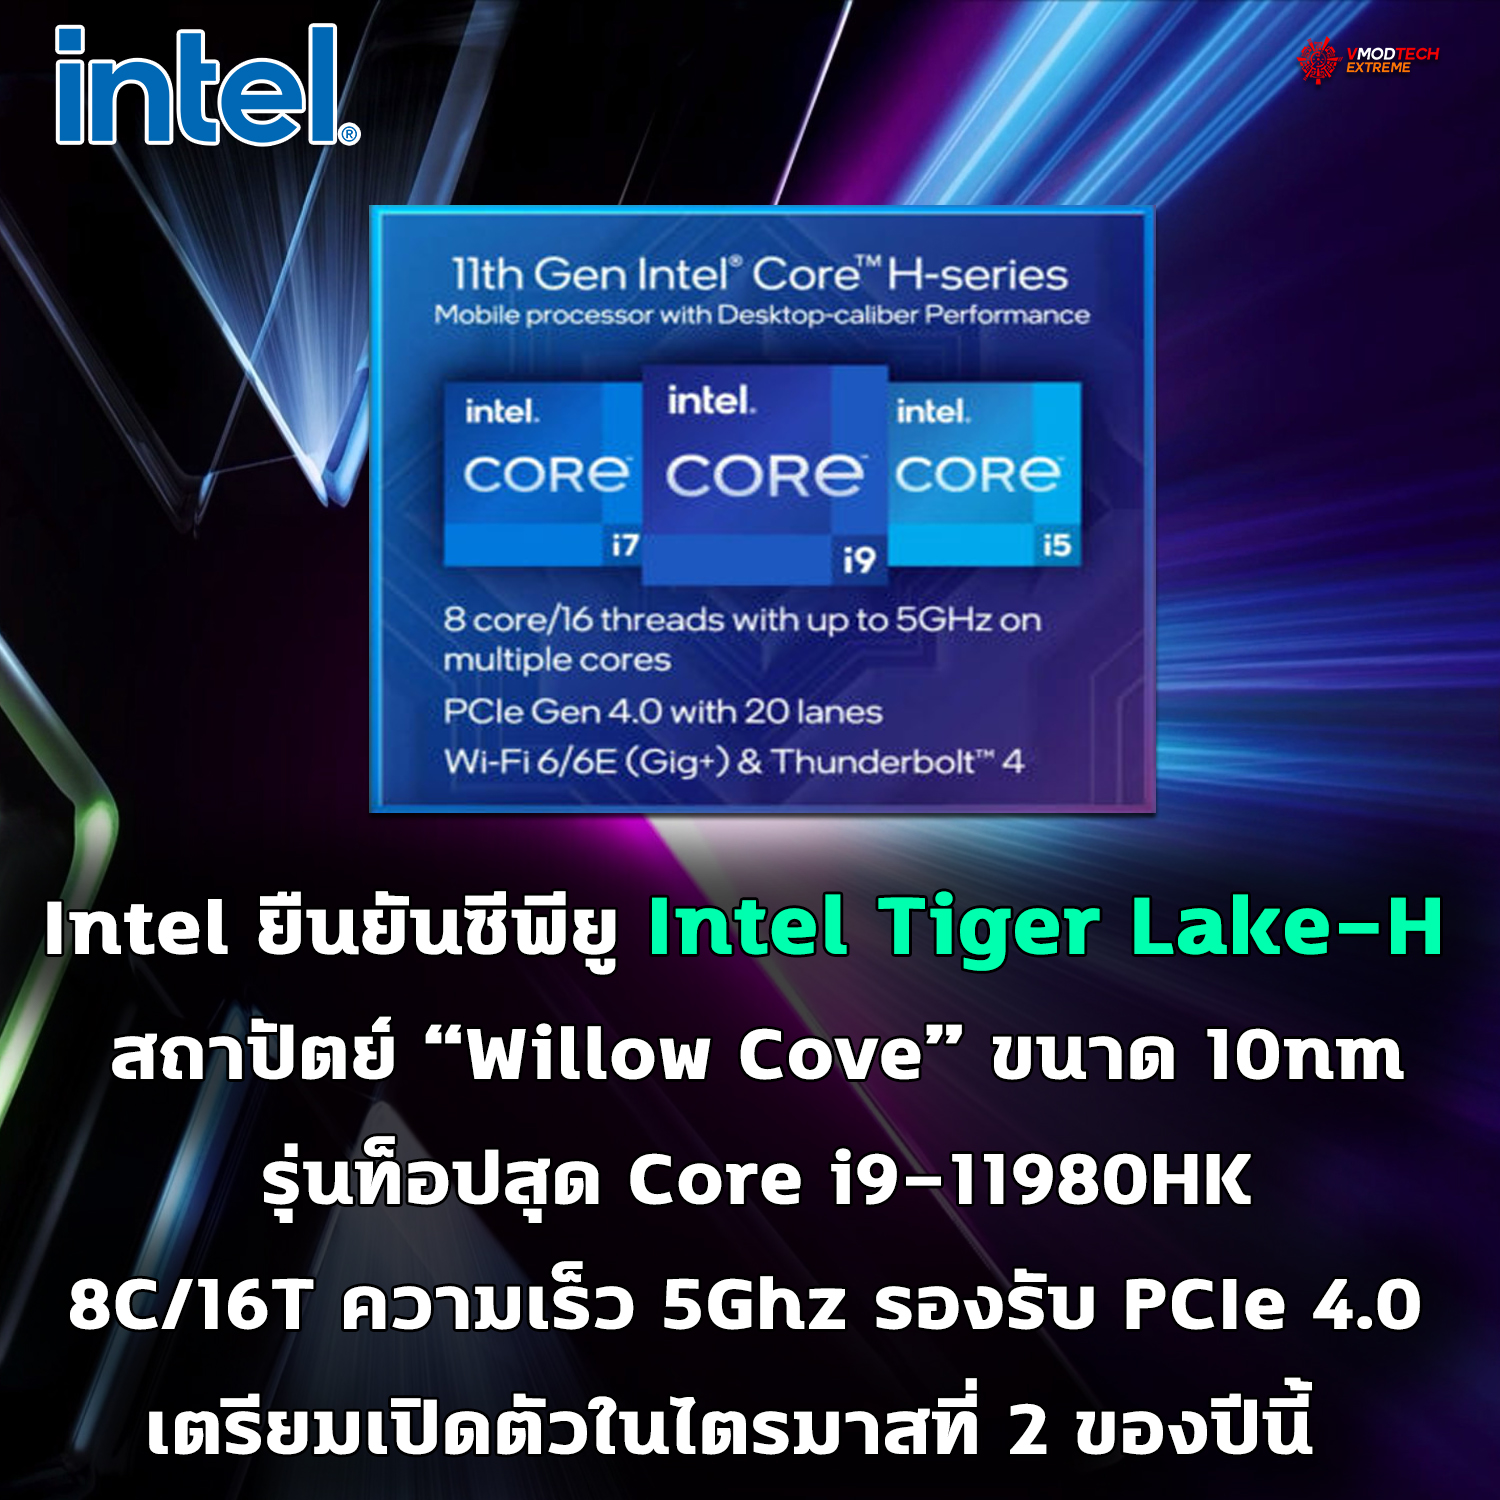 intel tiger lake h q2 2021 Intel ยืนยันซีพียู Intel Tiger Lake H เตรียมเปิดตัวในไตรมาสที่ 2 ของปีนี้ 